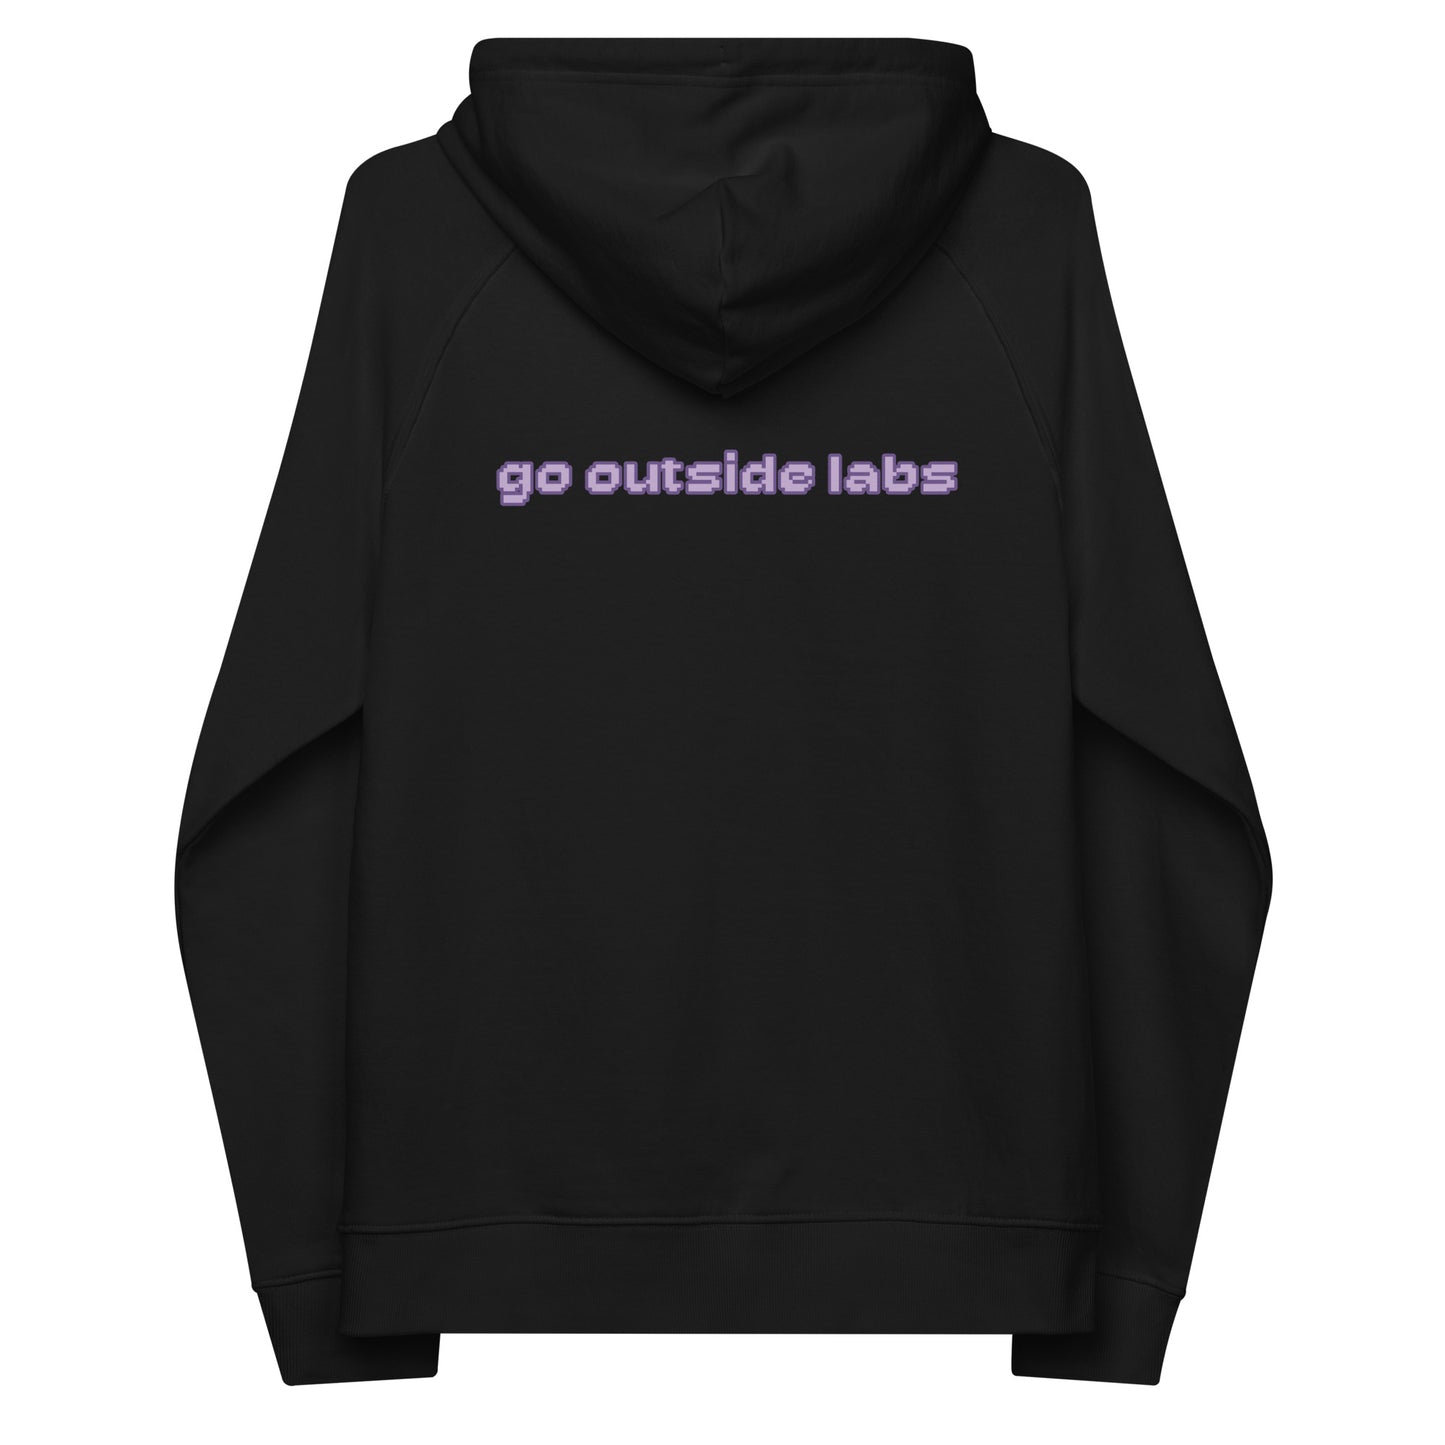 go outside labs hoodie